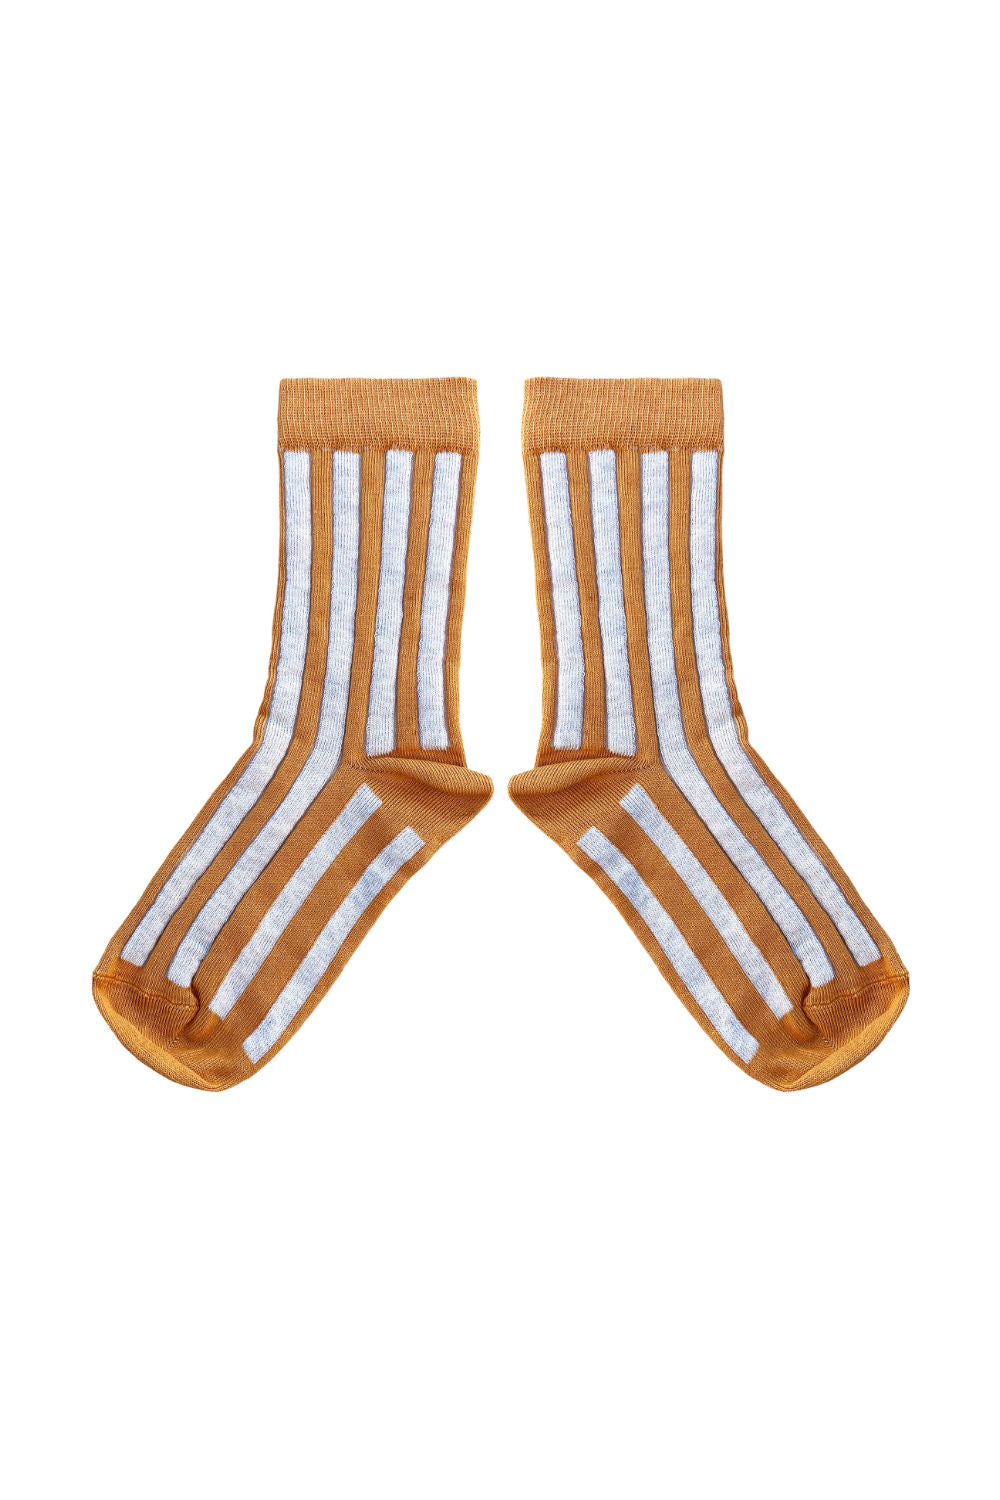 Tirion Short Socks Marigold/Sand - Child